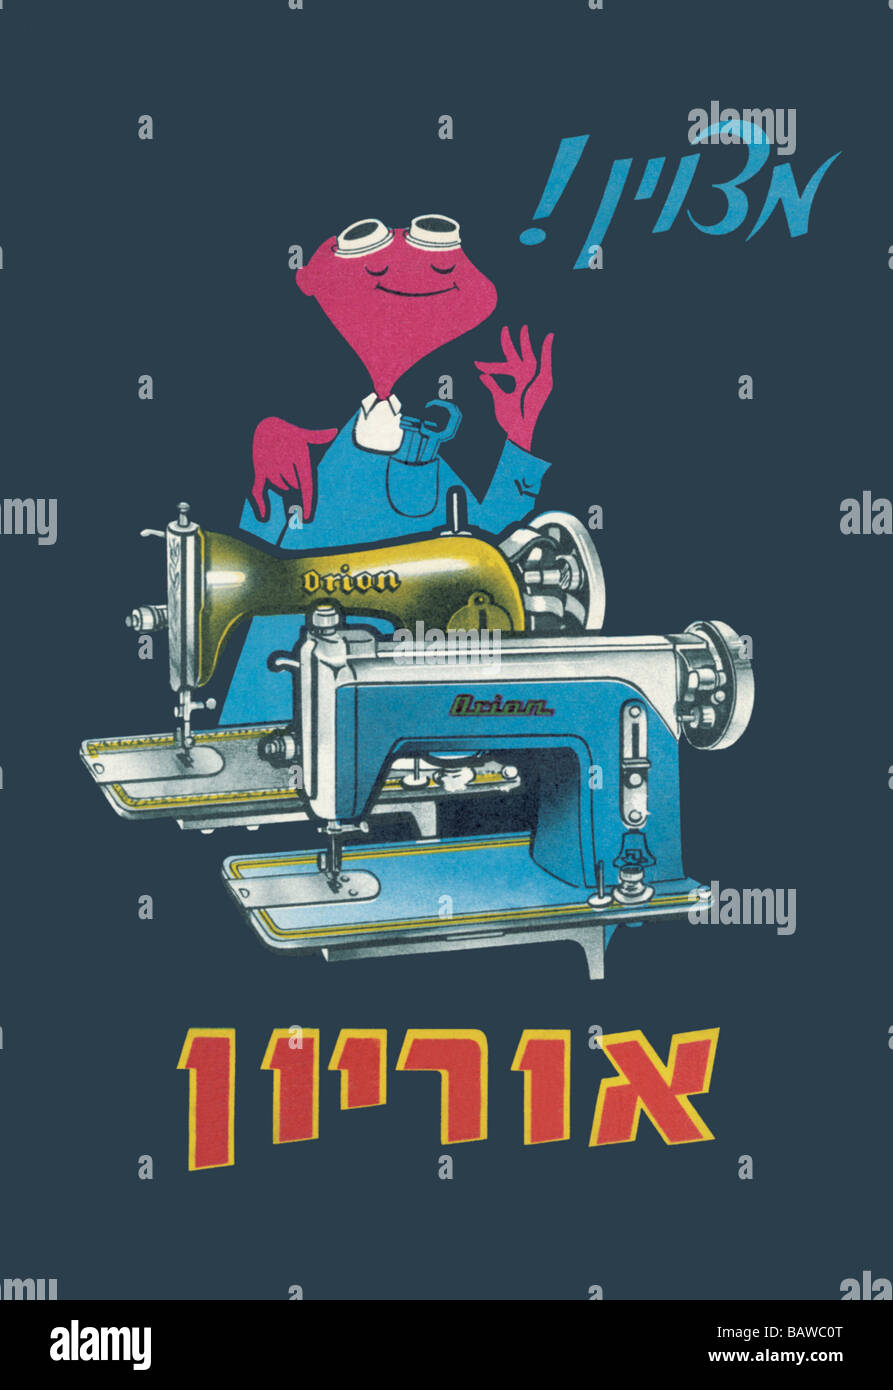 Máquina de coser de Orion Fotografía de stock - Alamy